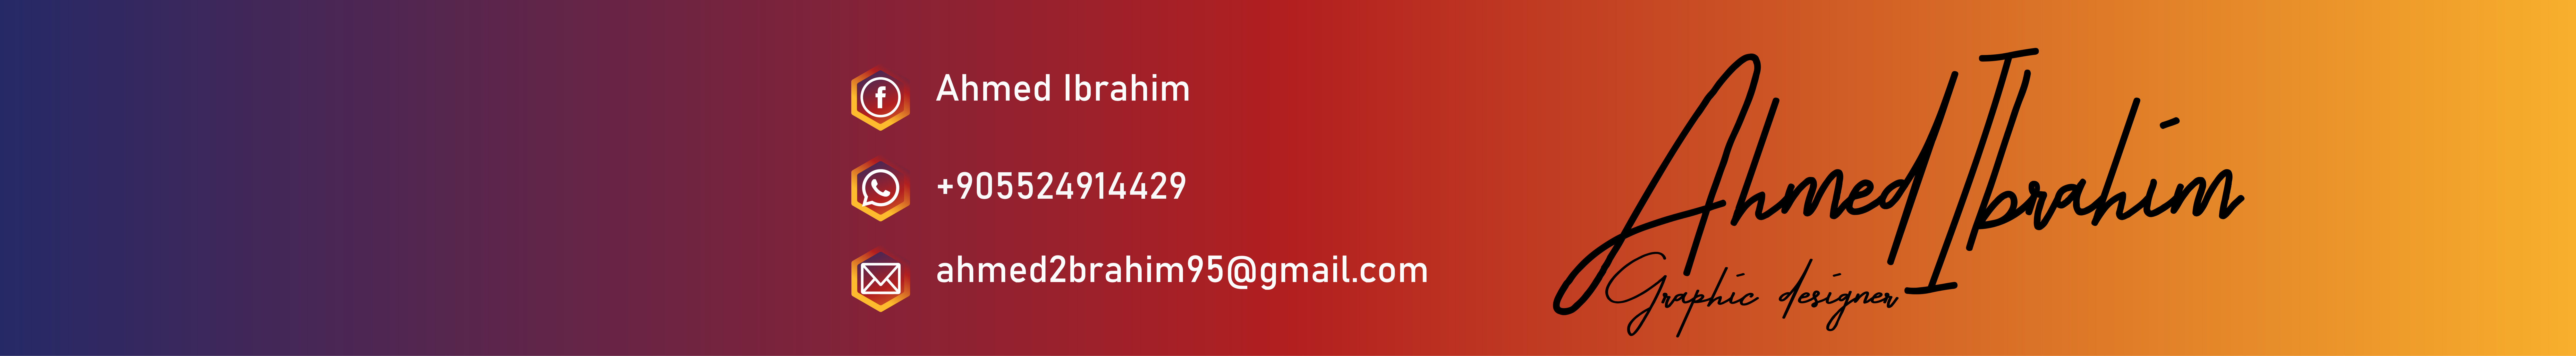 Ahmed Ibrahim's profile banner